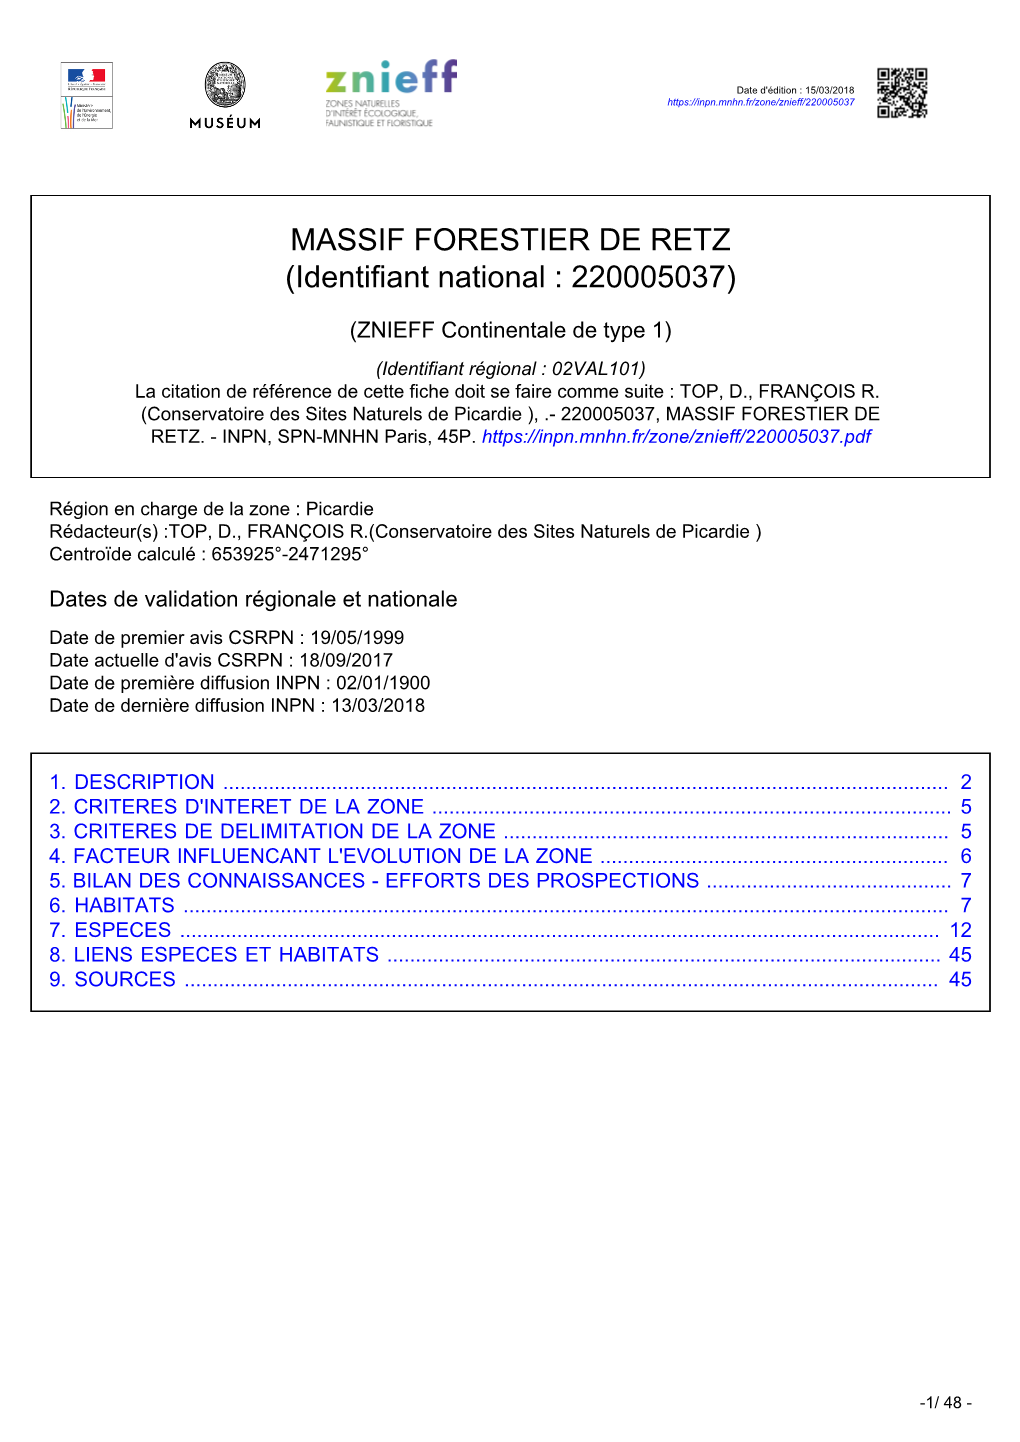 MASSIF FORESTIER DE RETZ (Identifiant National : 220005037)